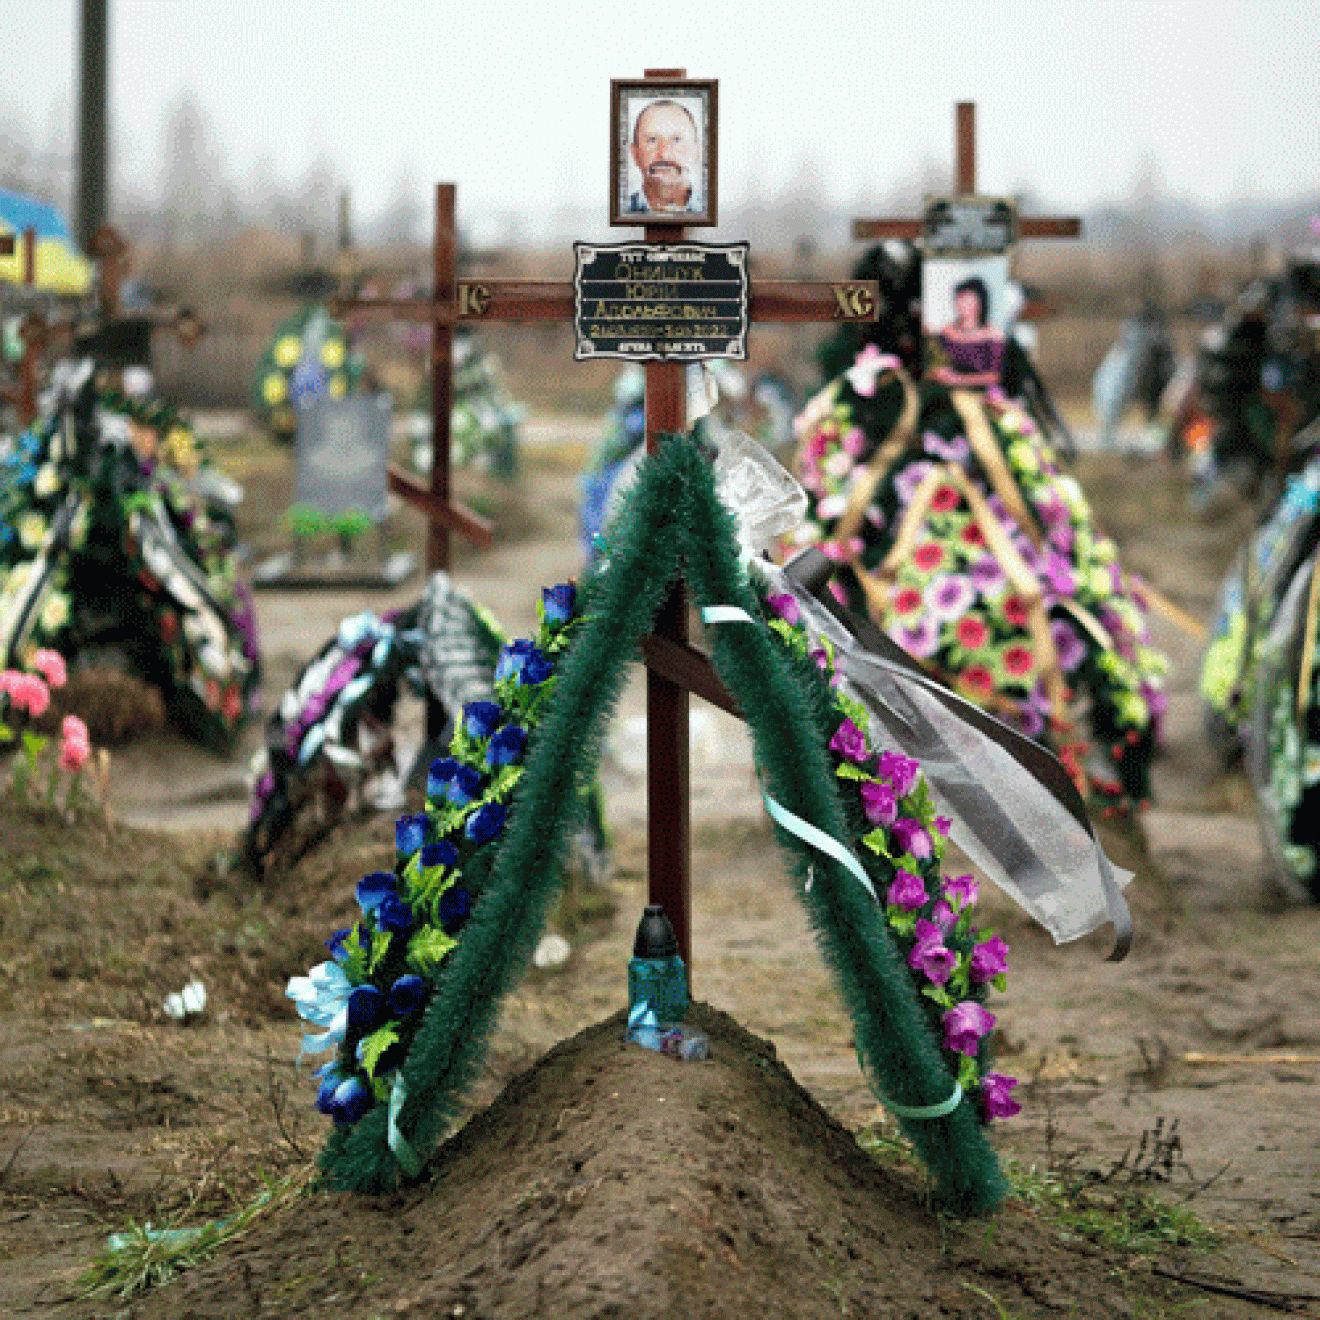 Photos on crosses covered in flowers mark graves in Bucha, Ukraine